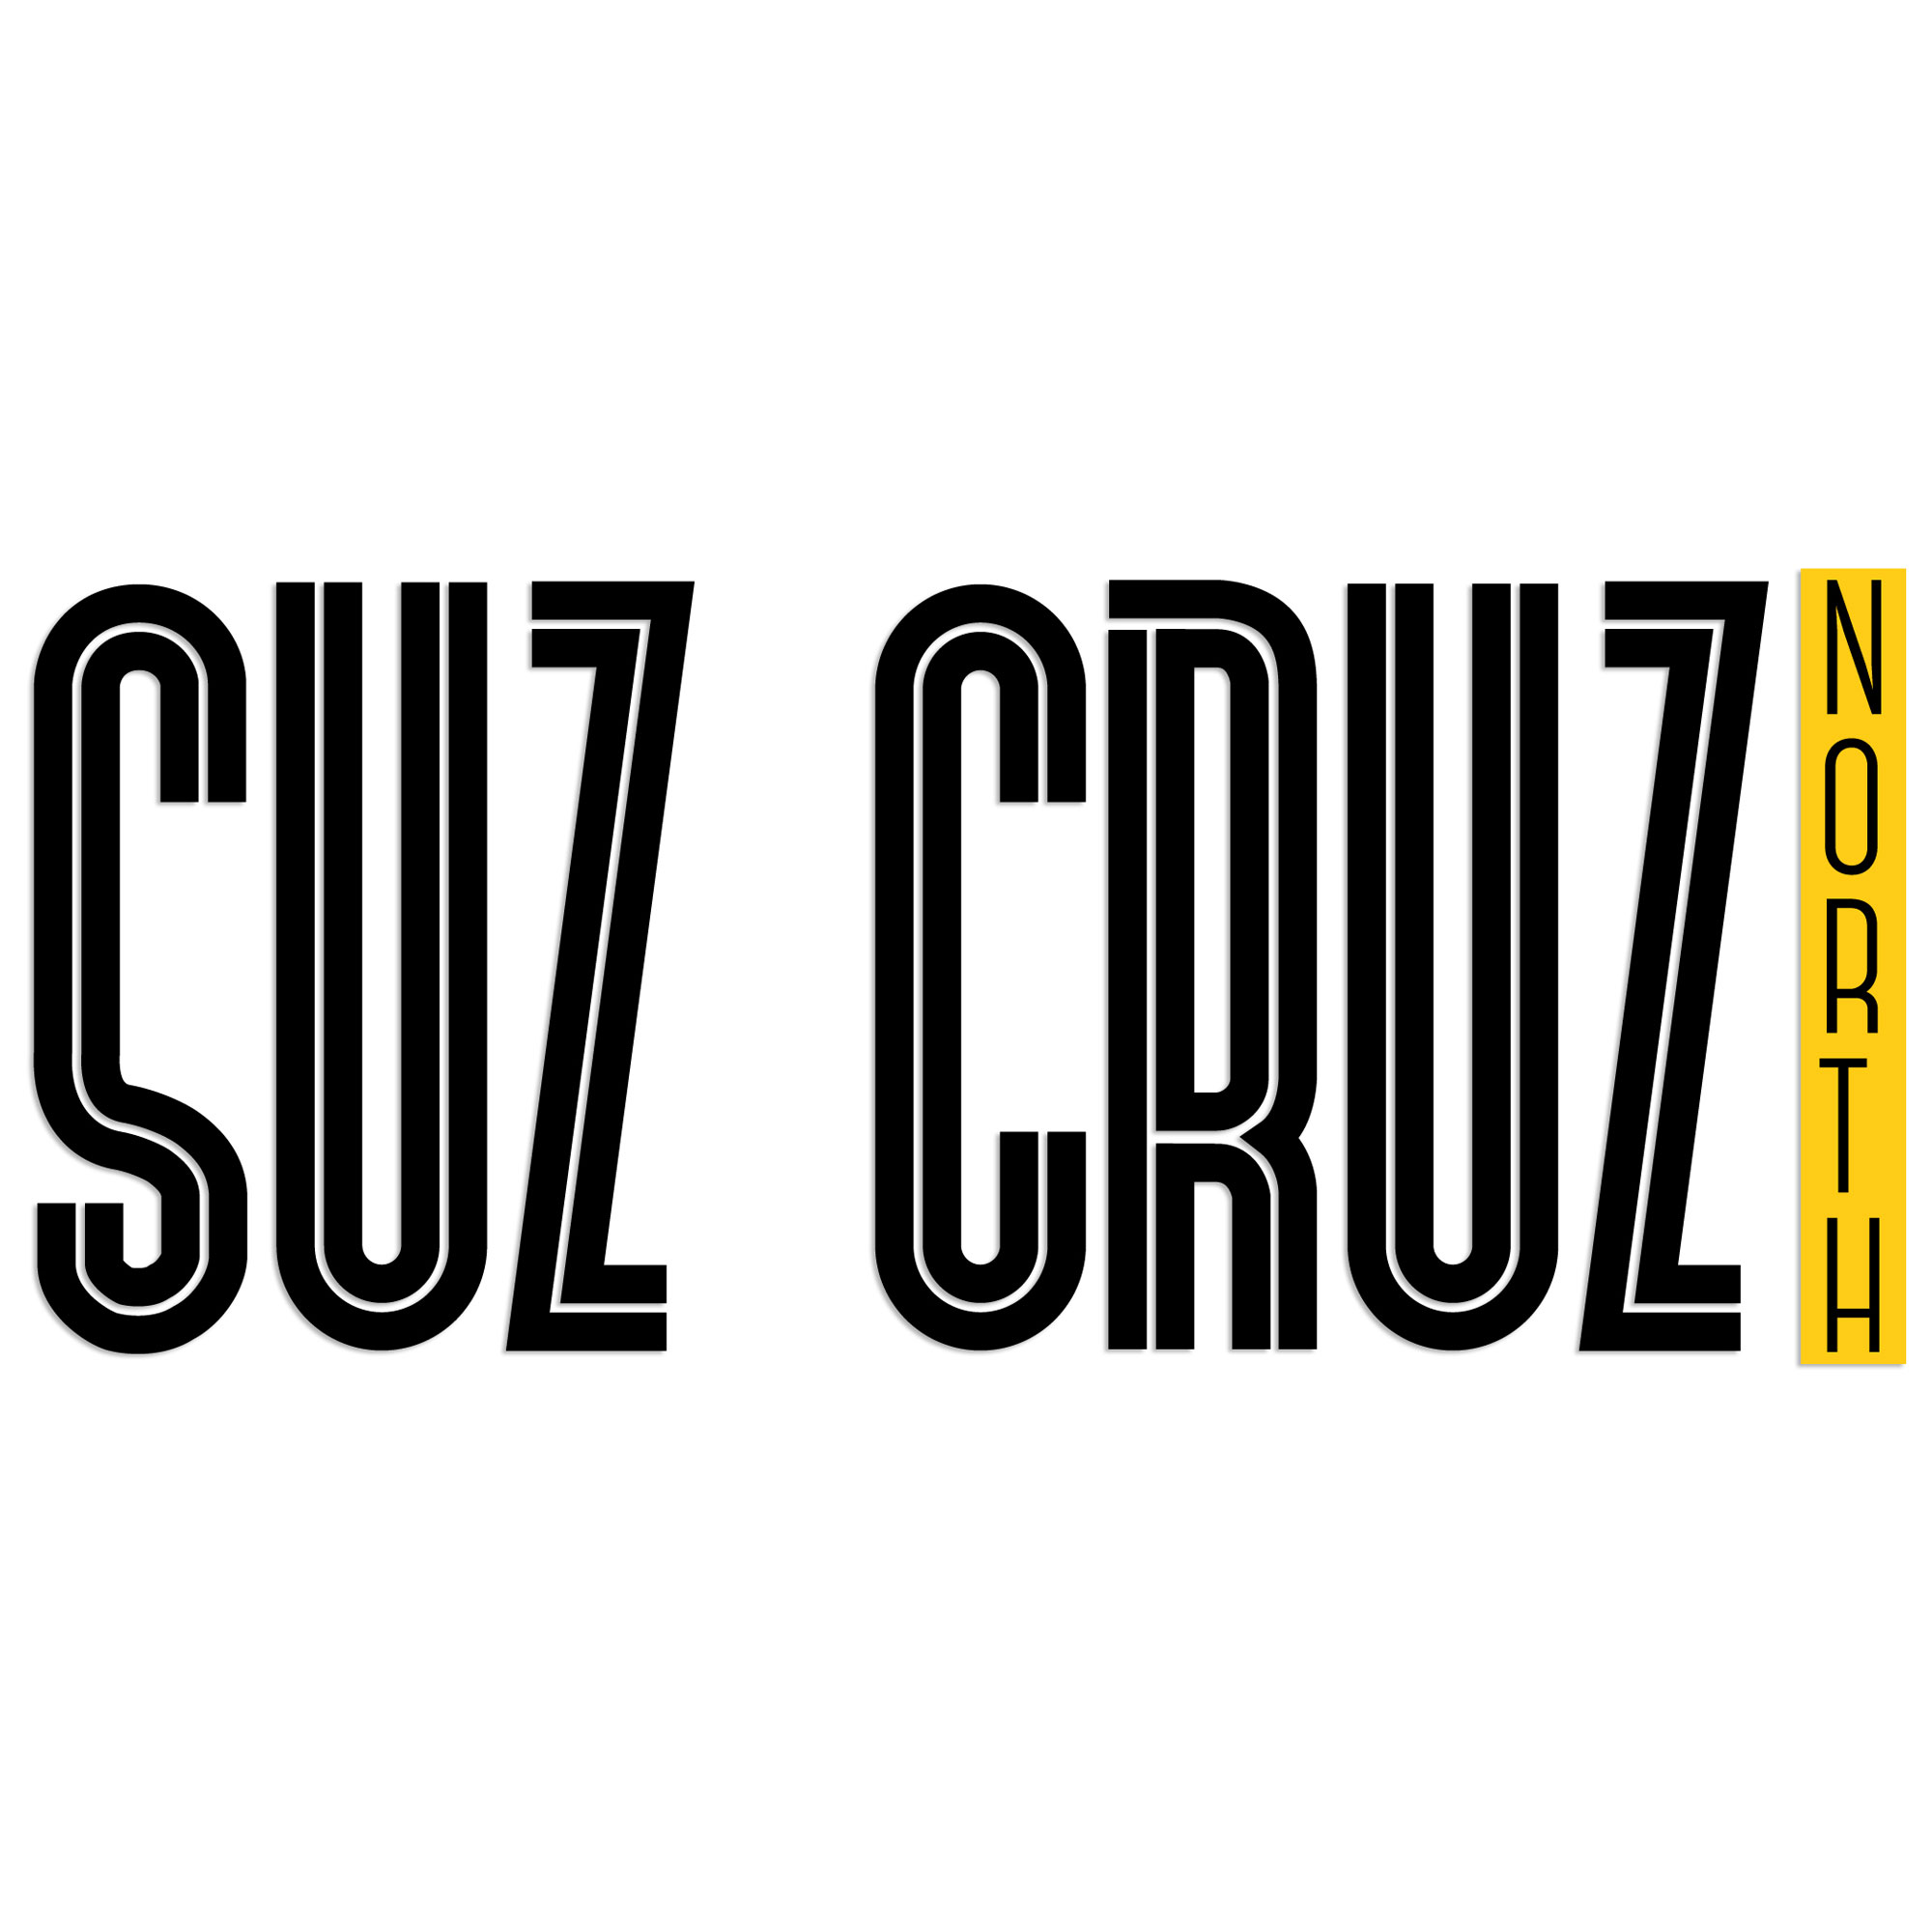 (c) Suzcruznorth.co.uk